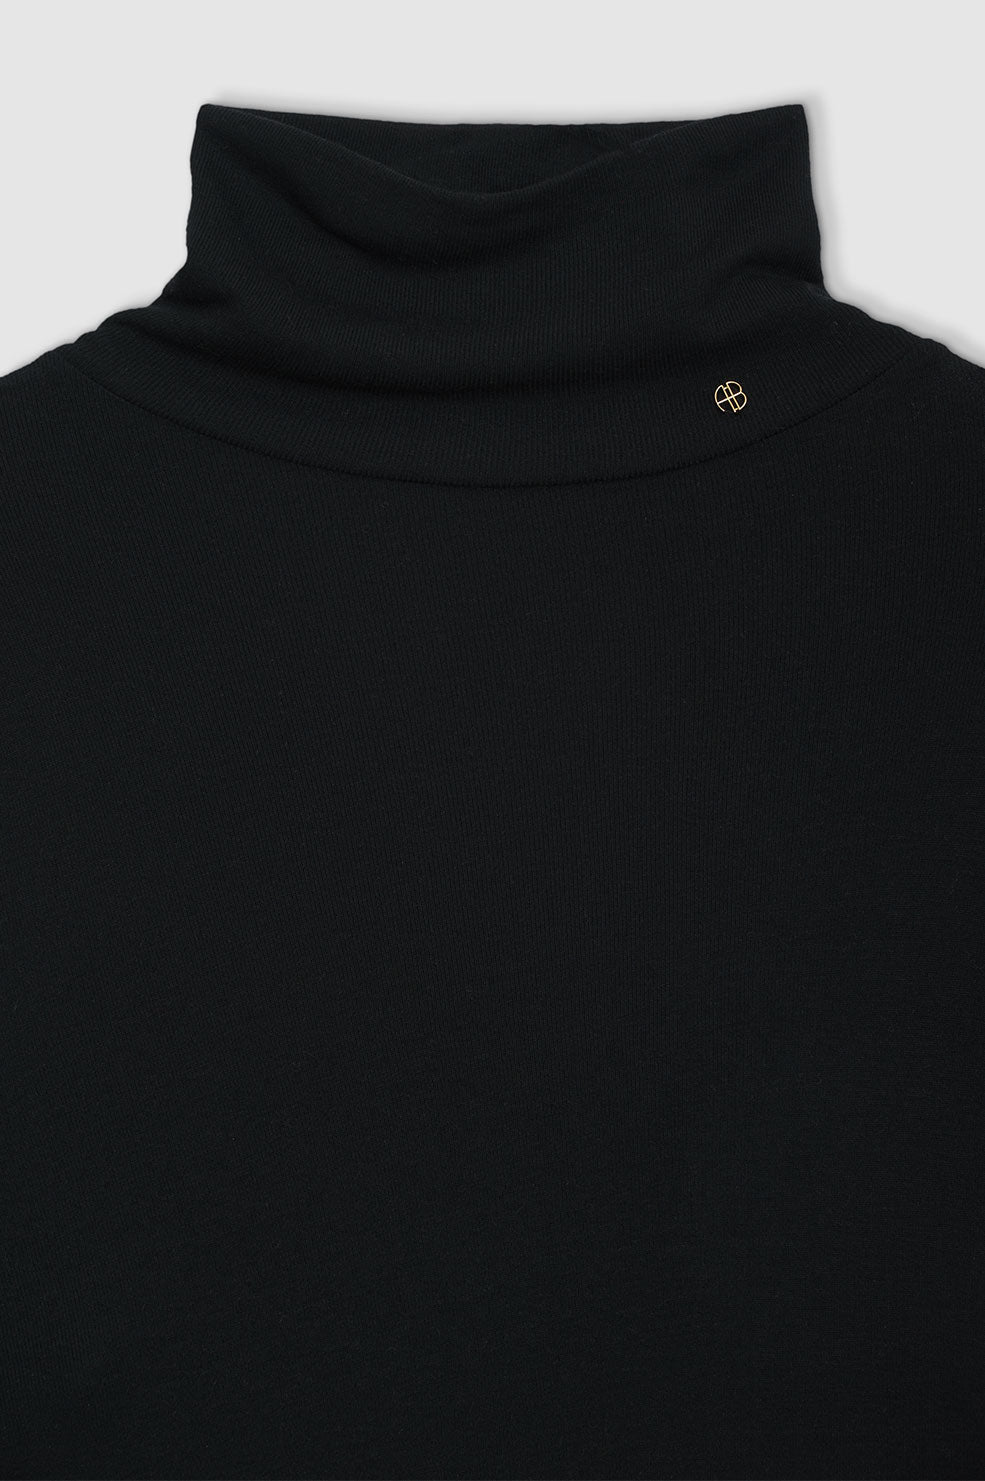 ANINE BING Lia Top - Black Cashmere Blend - Detail View